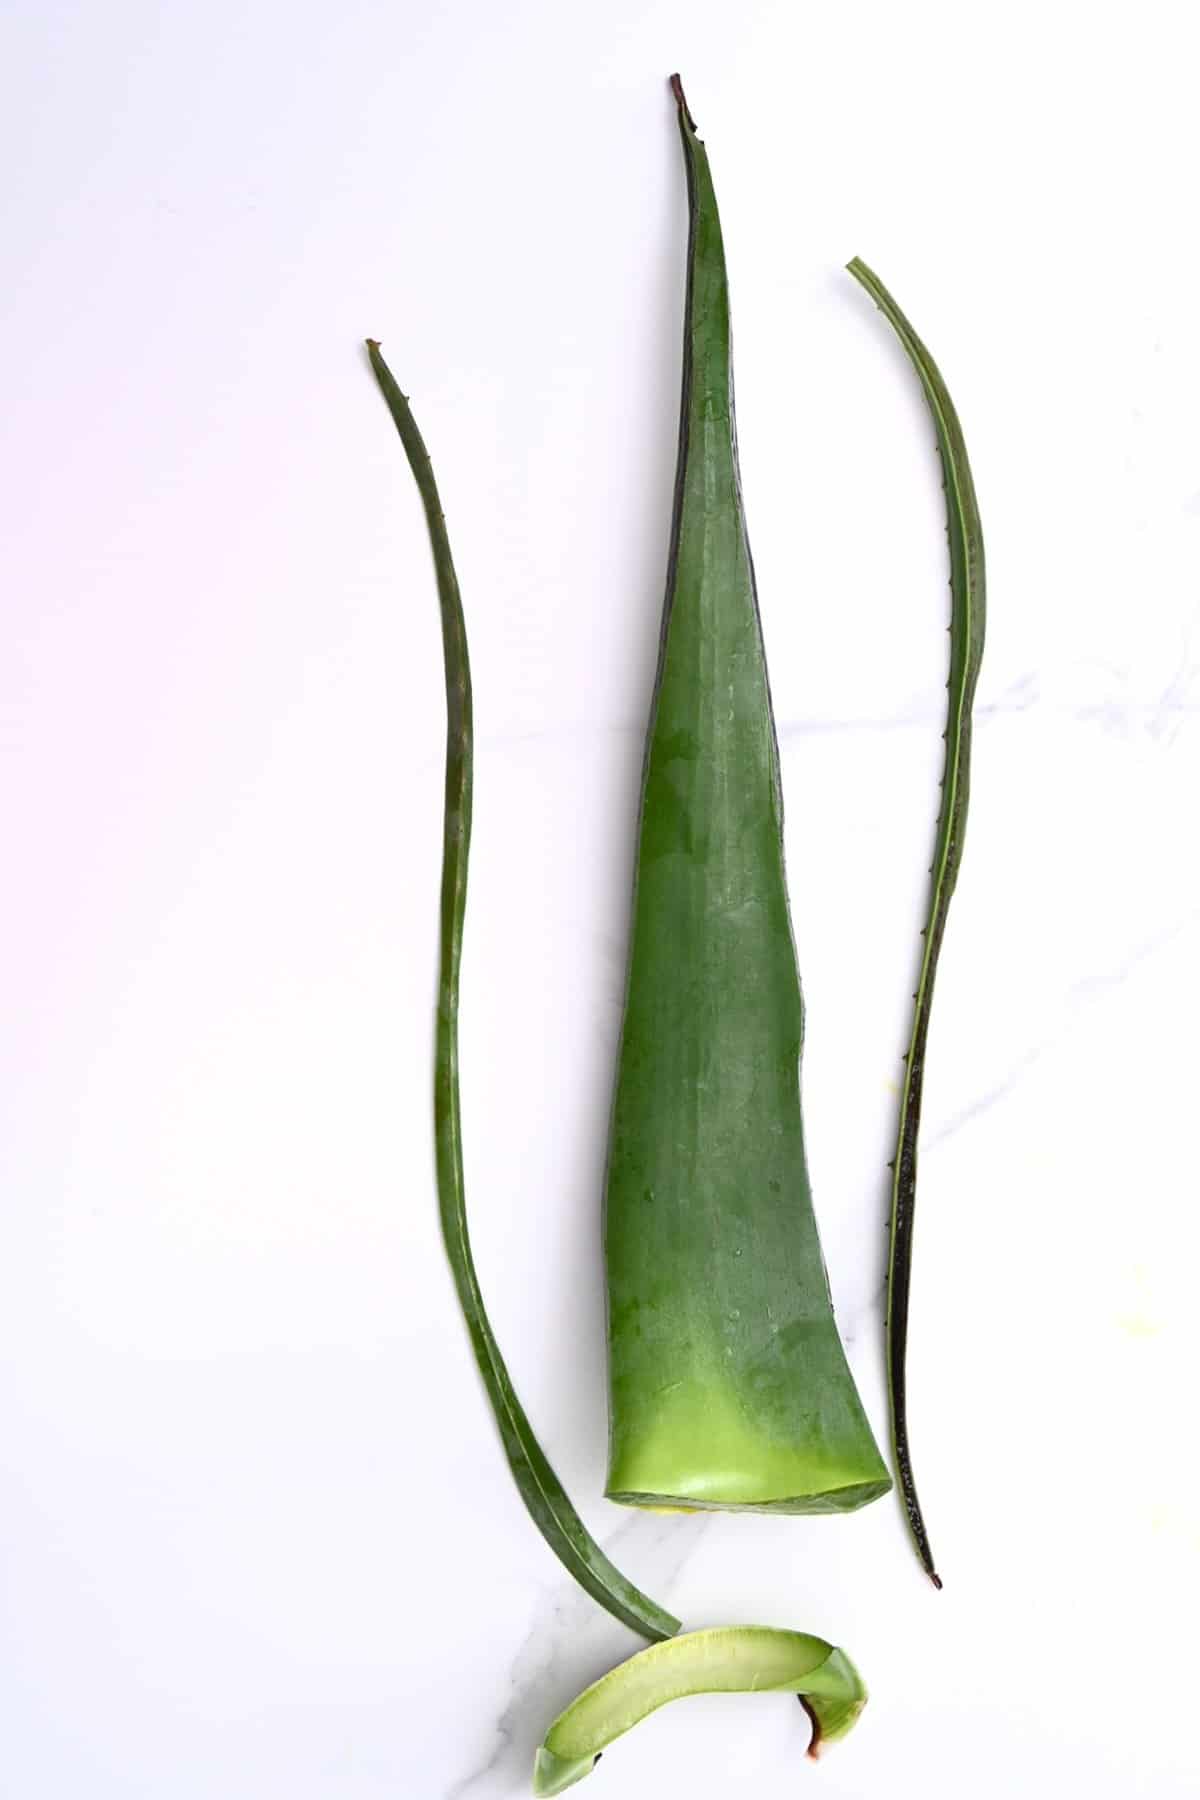 Aloe vera leaf with cut edges